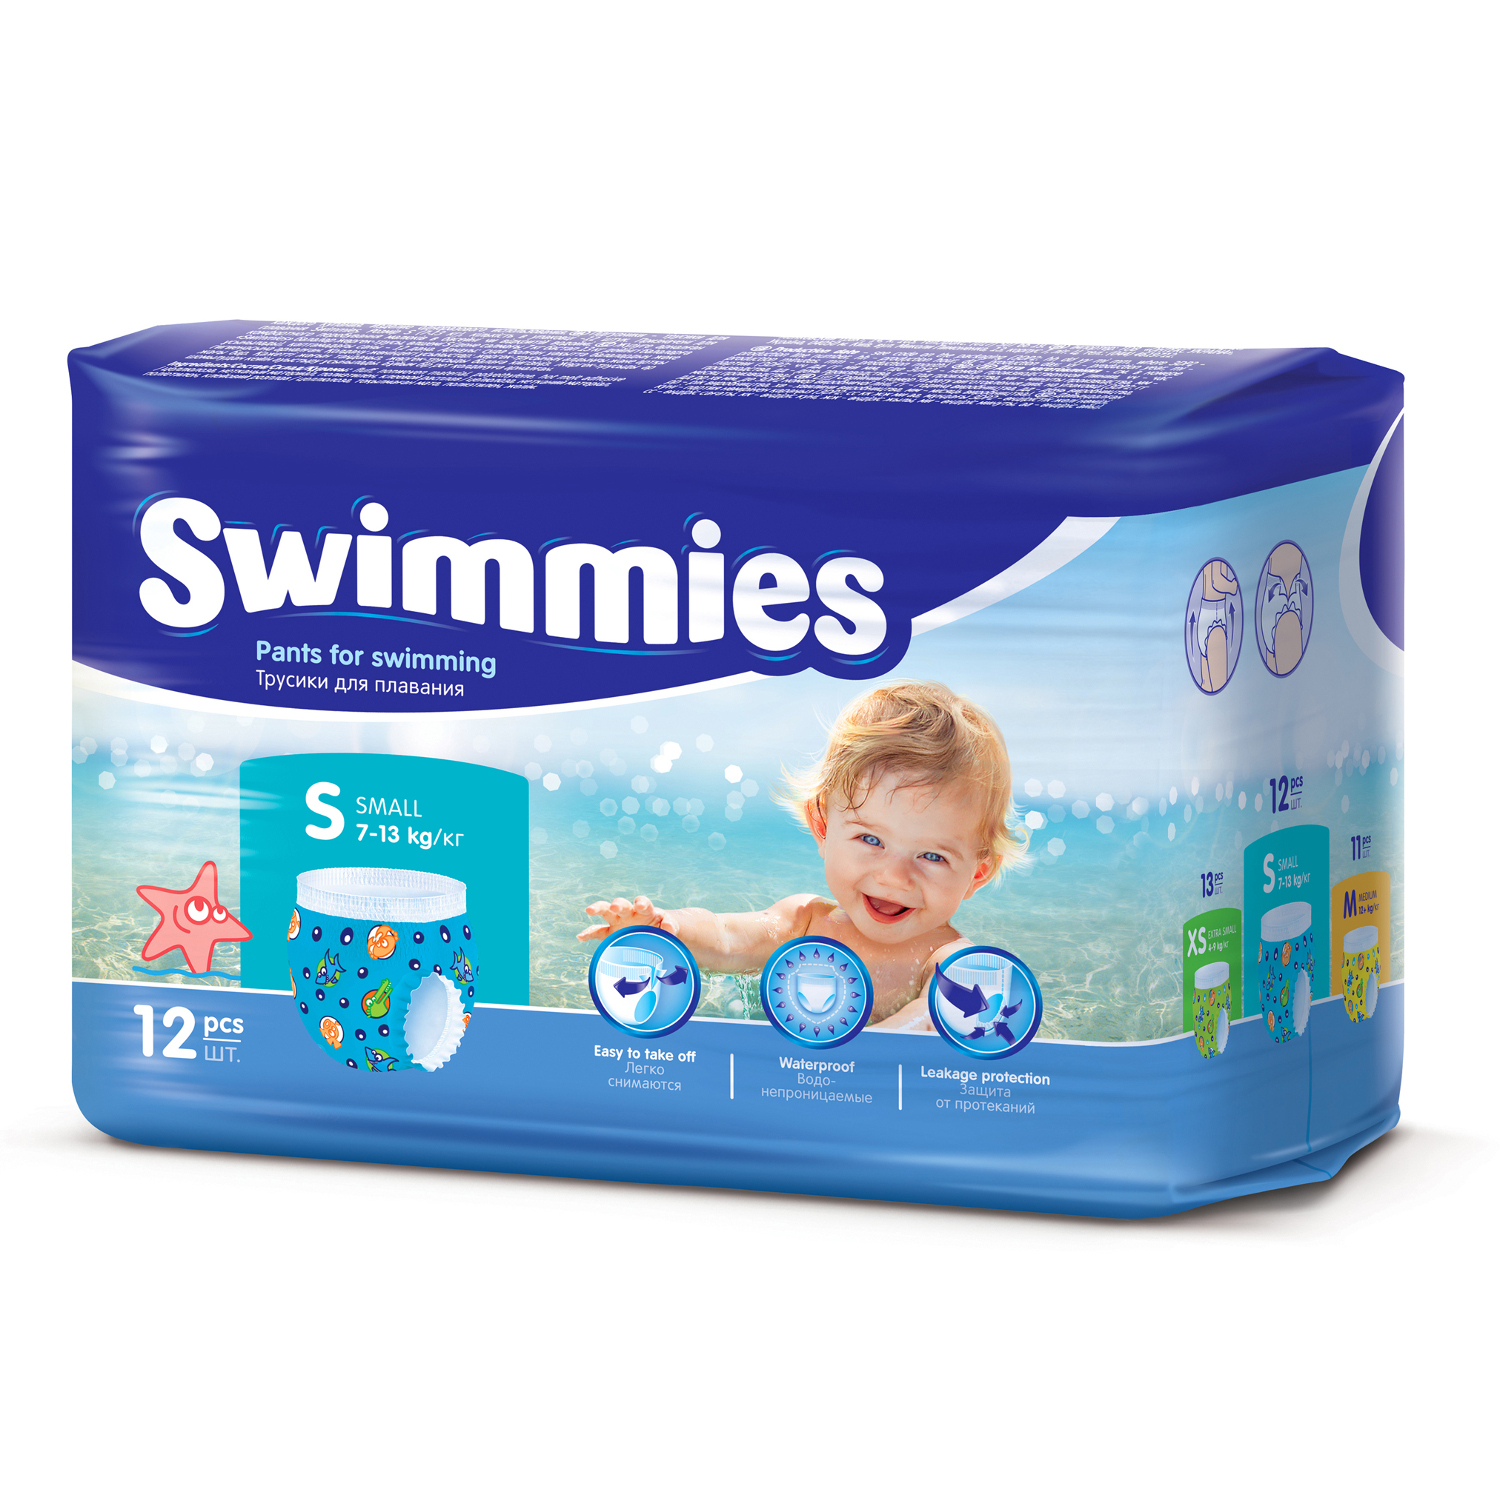 Детские одноразовые трусики для плаванья Swimmies 7-13 кг (Small) - 12 шт